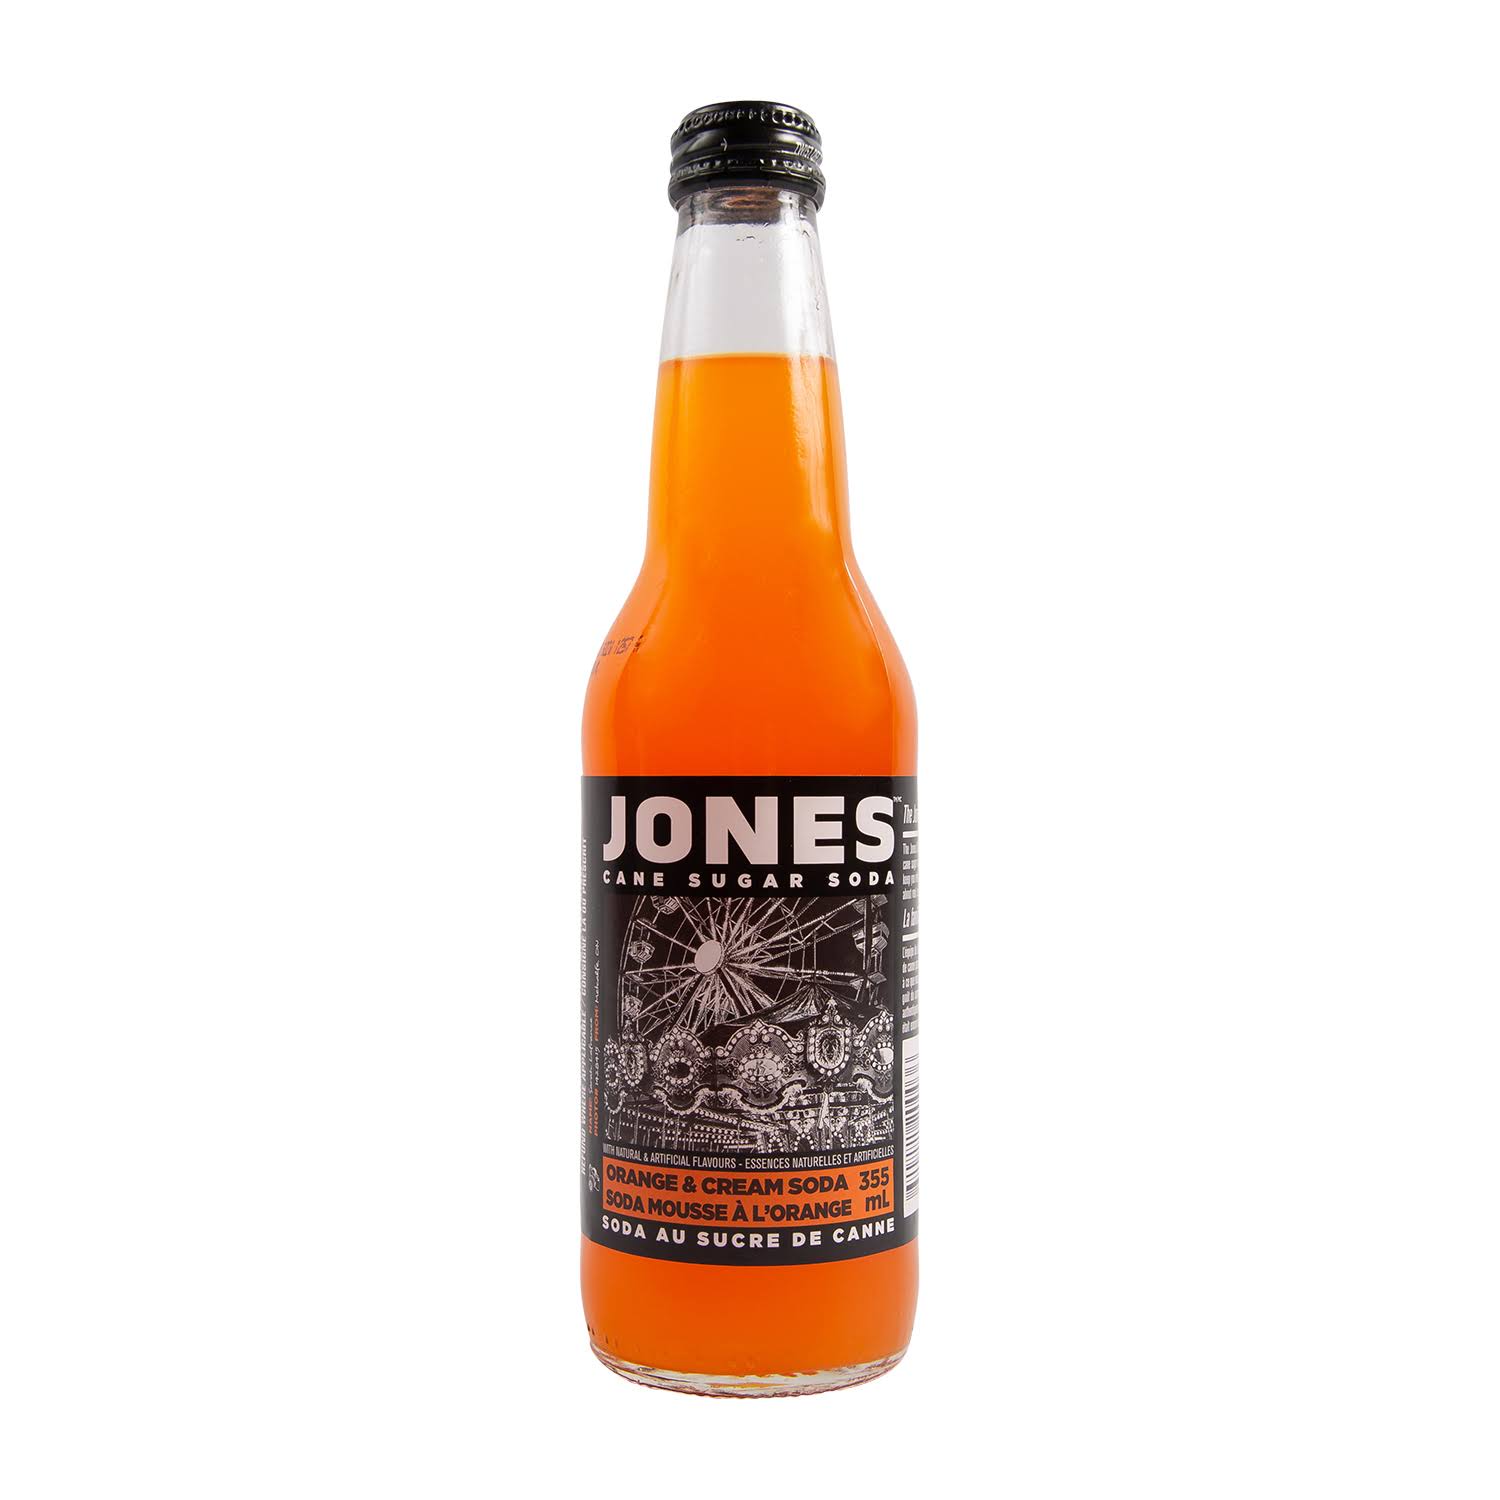 Jones - Cane Sugar Soda - Orange & Cream